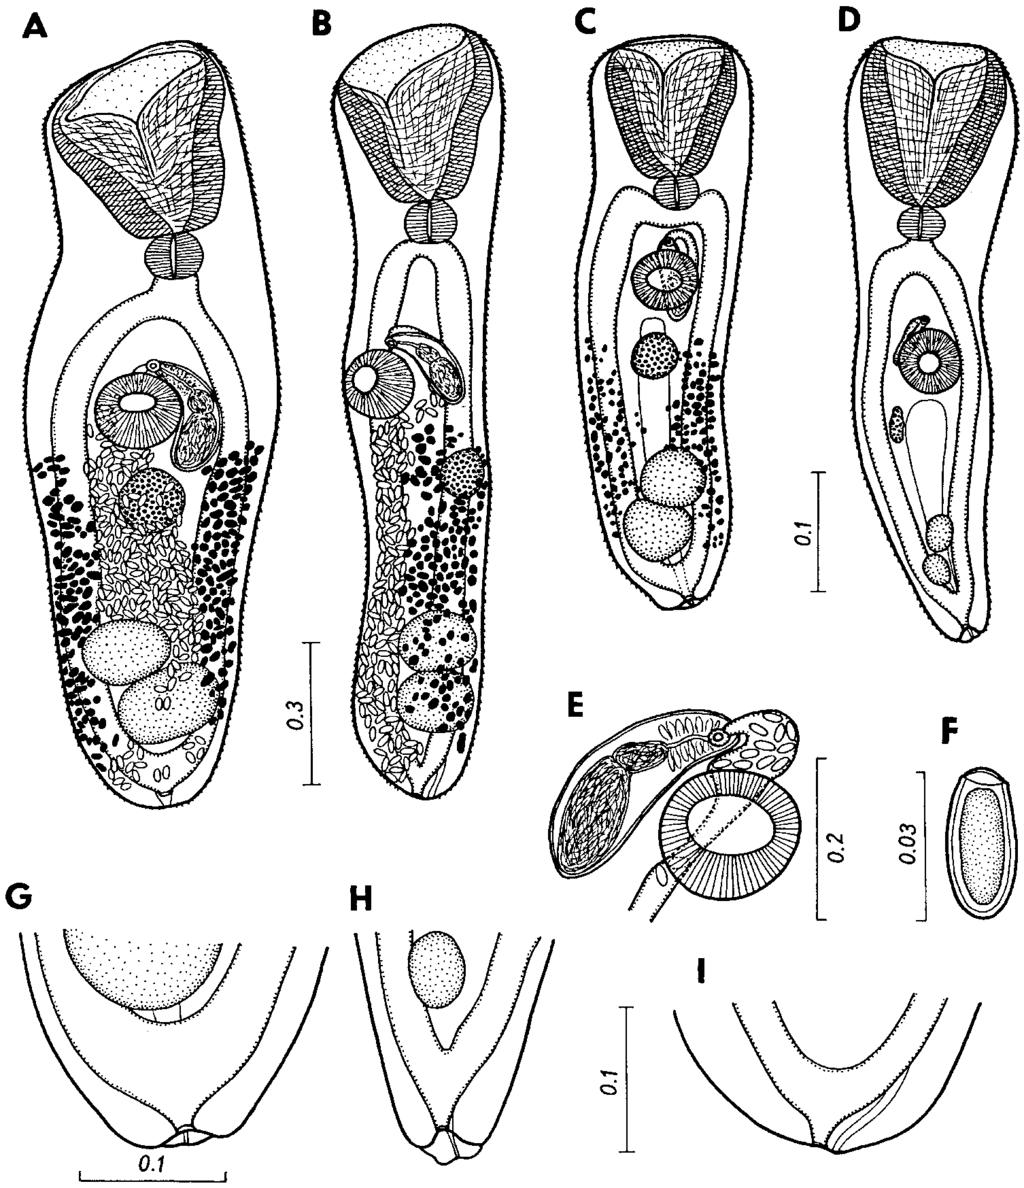 201 Figure 1. Perezitrema bychowskyi (Caballero & Caballero, 1975) from Atractosteus tropicus, Mexico.